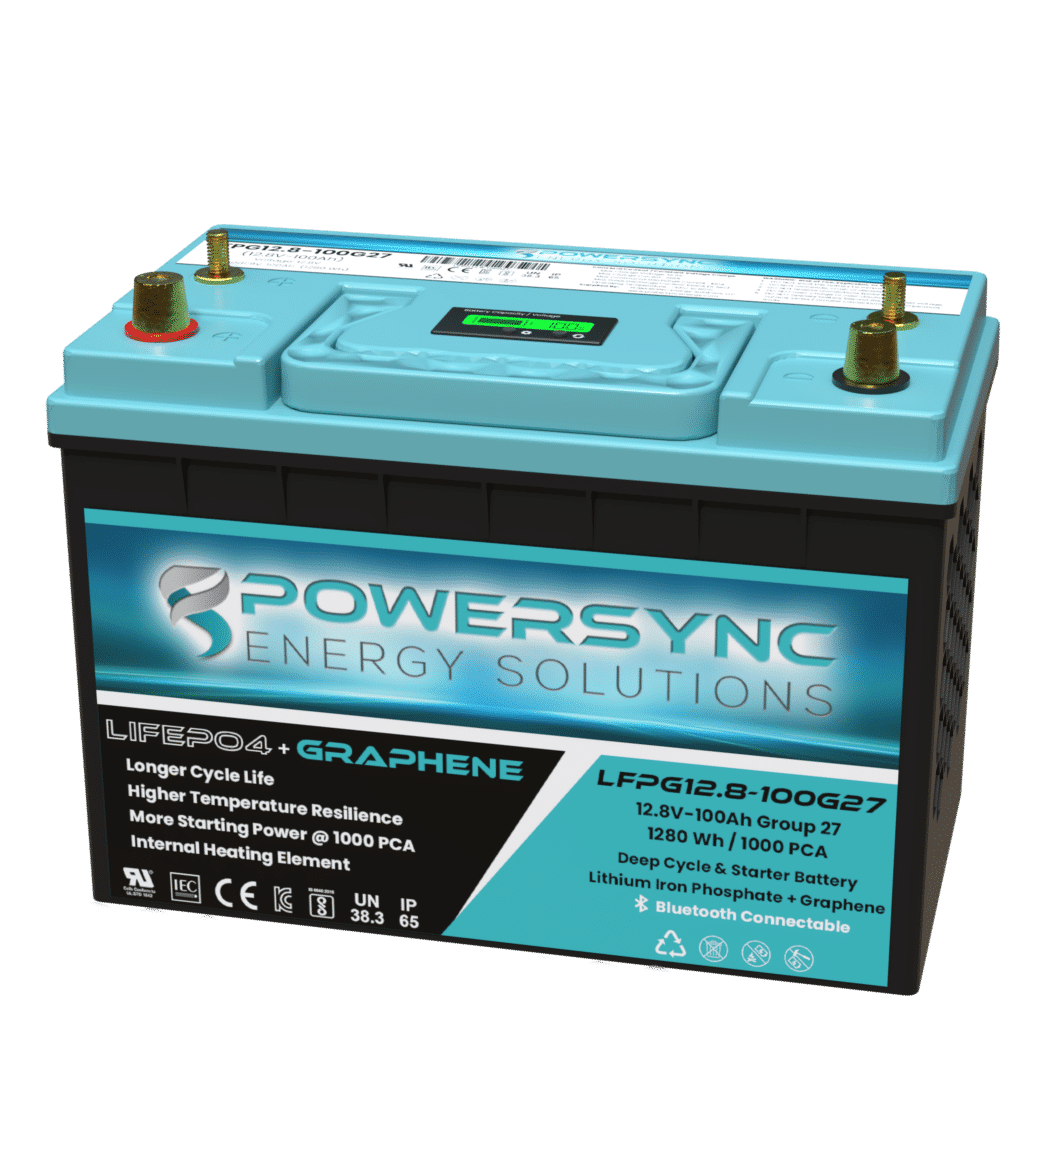 LFPG12.8-300G8D Batería de Litio de Doble Uso LiFePO4+Grafeno - POWERSYNC  Energy Solutions